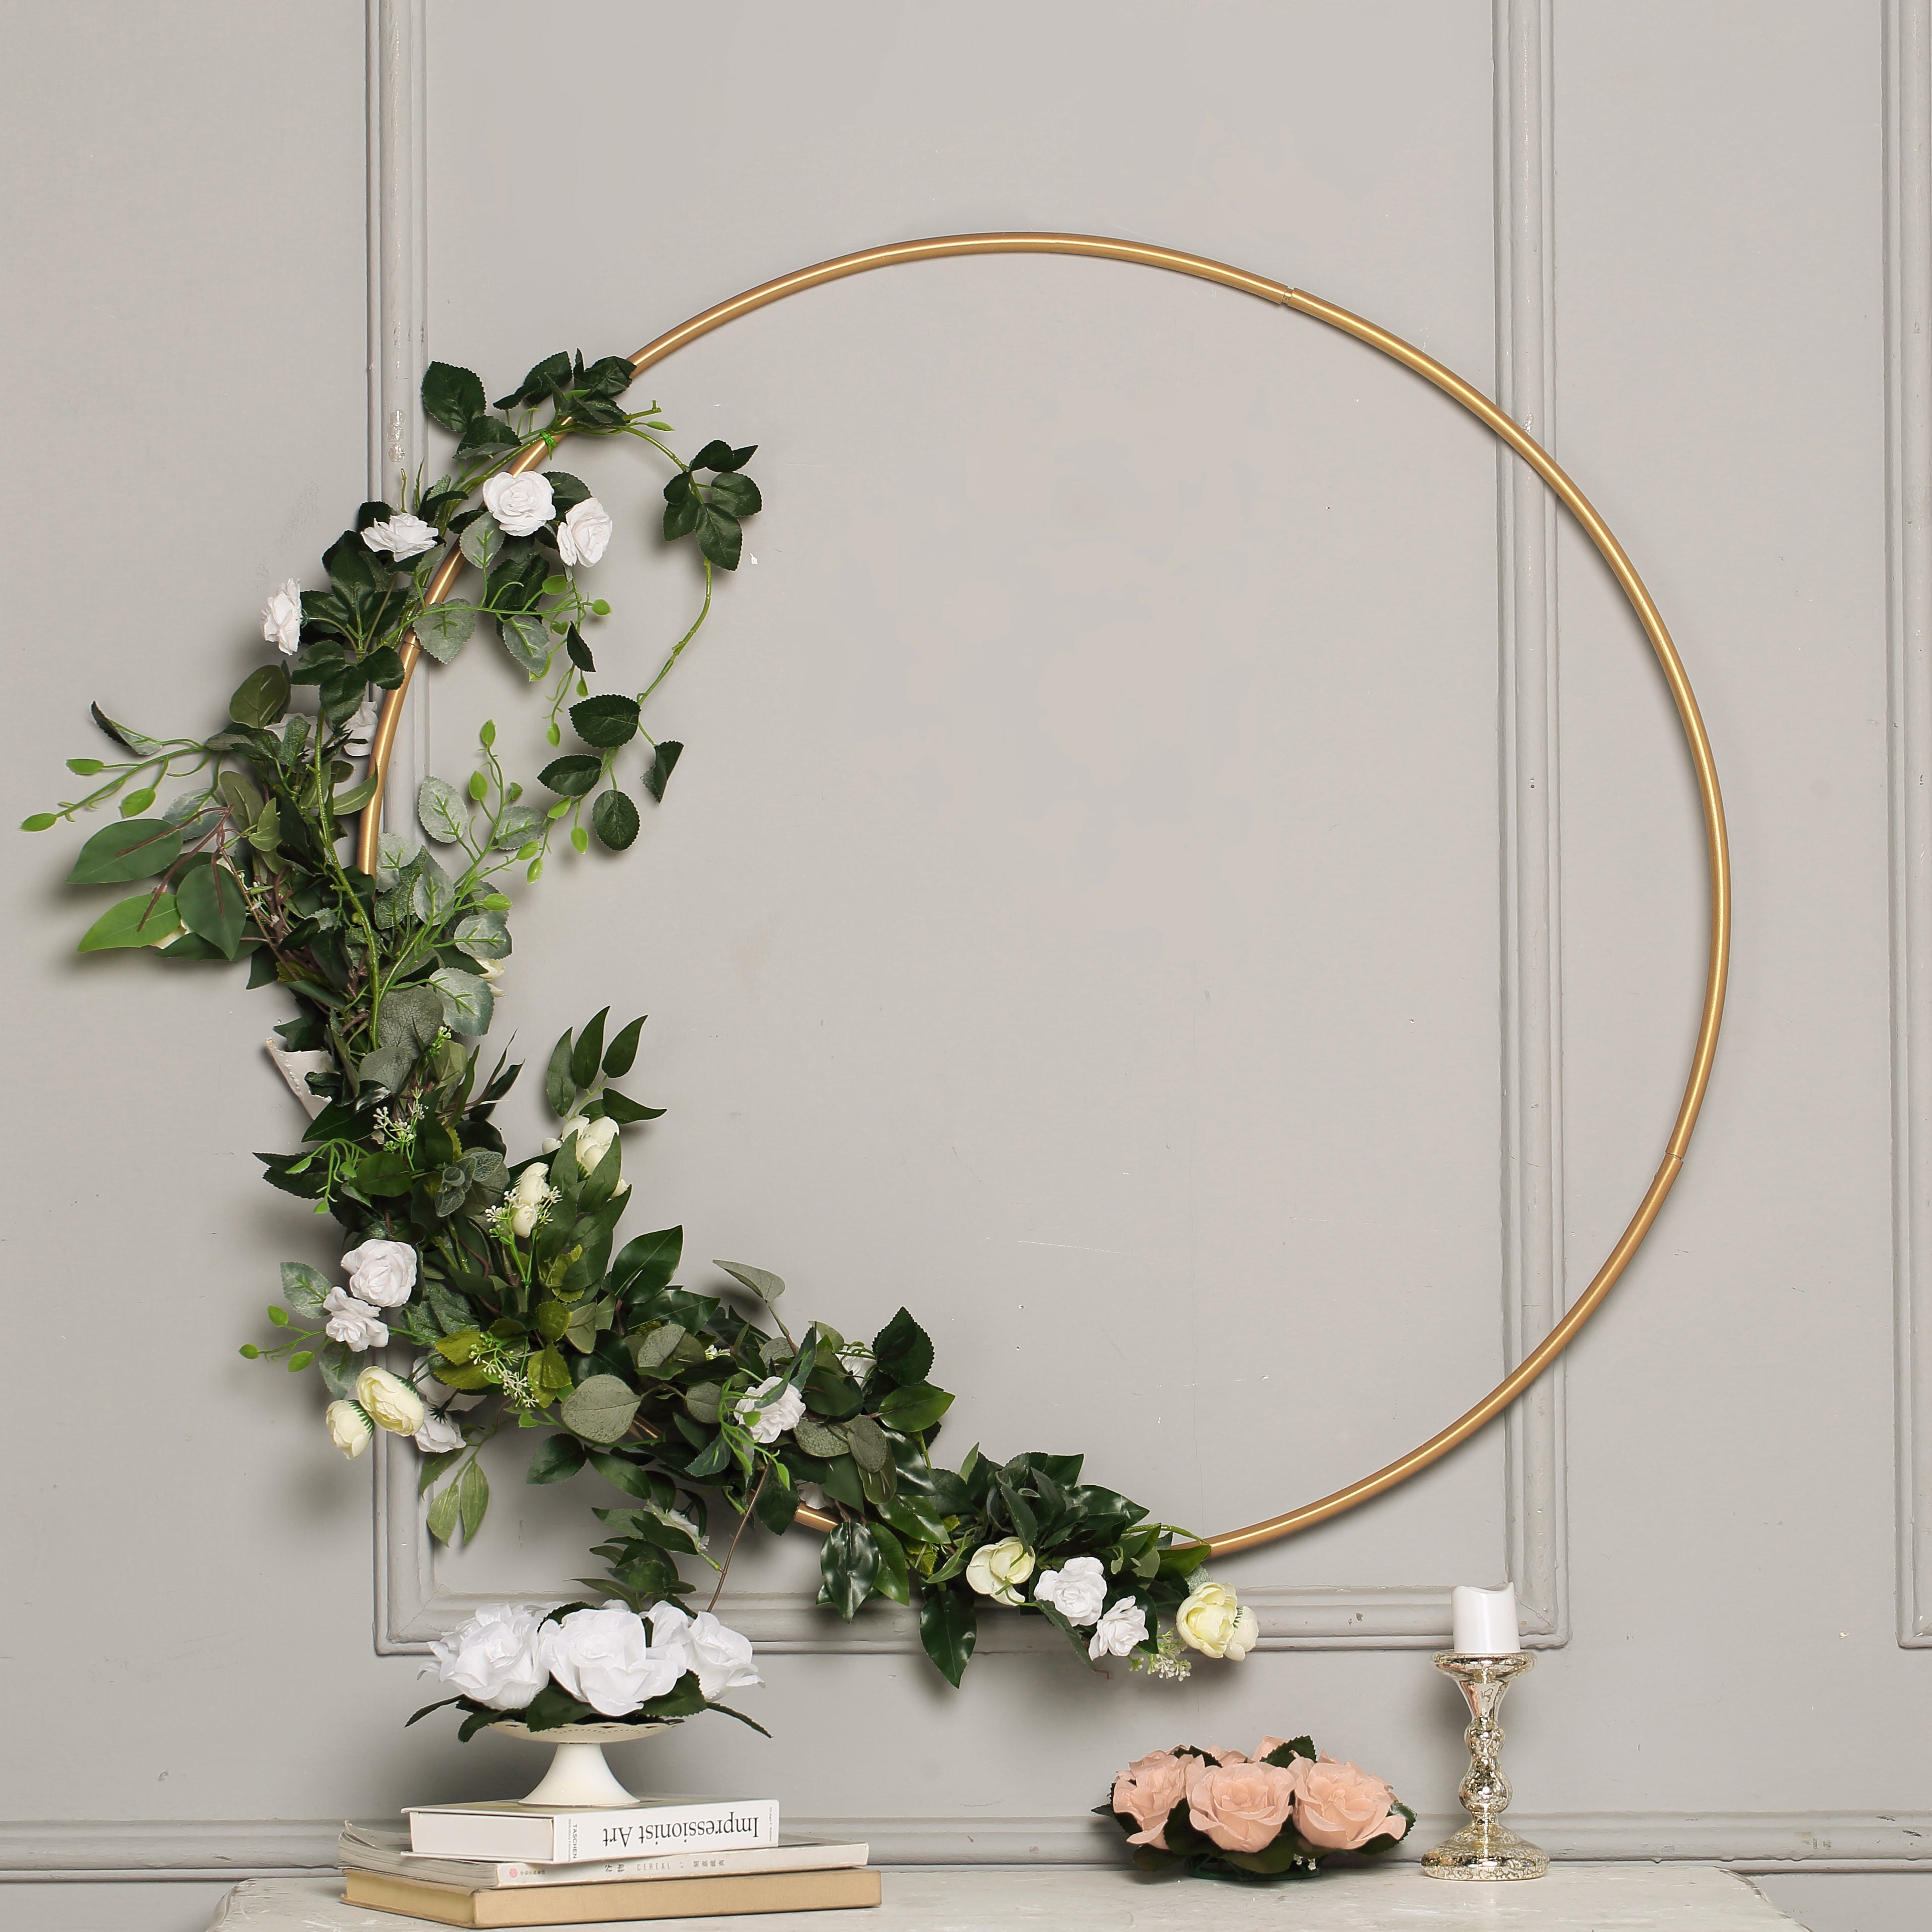 CRAFT HANGING HOOP Heart Floral Hoop Wedding Party Decor Flower Wreath  Frame $11.46 - PicClick AU